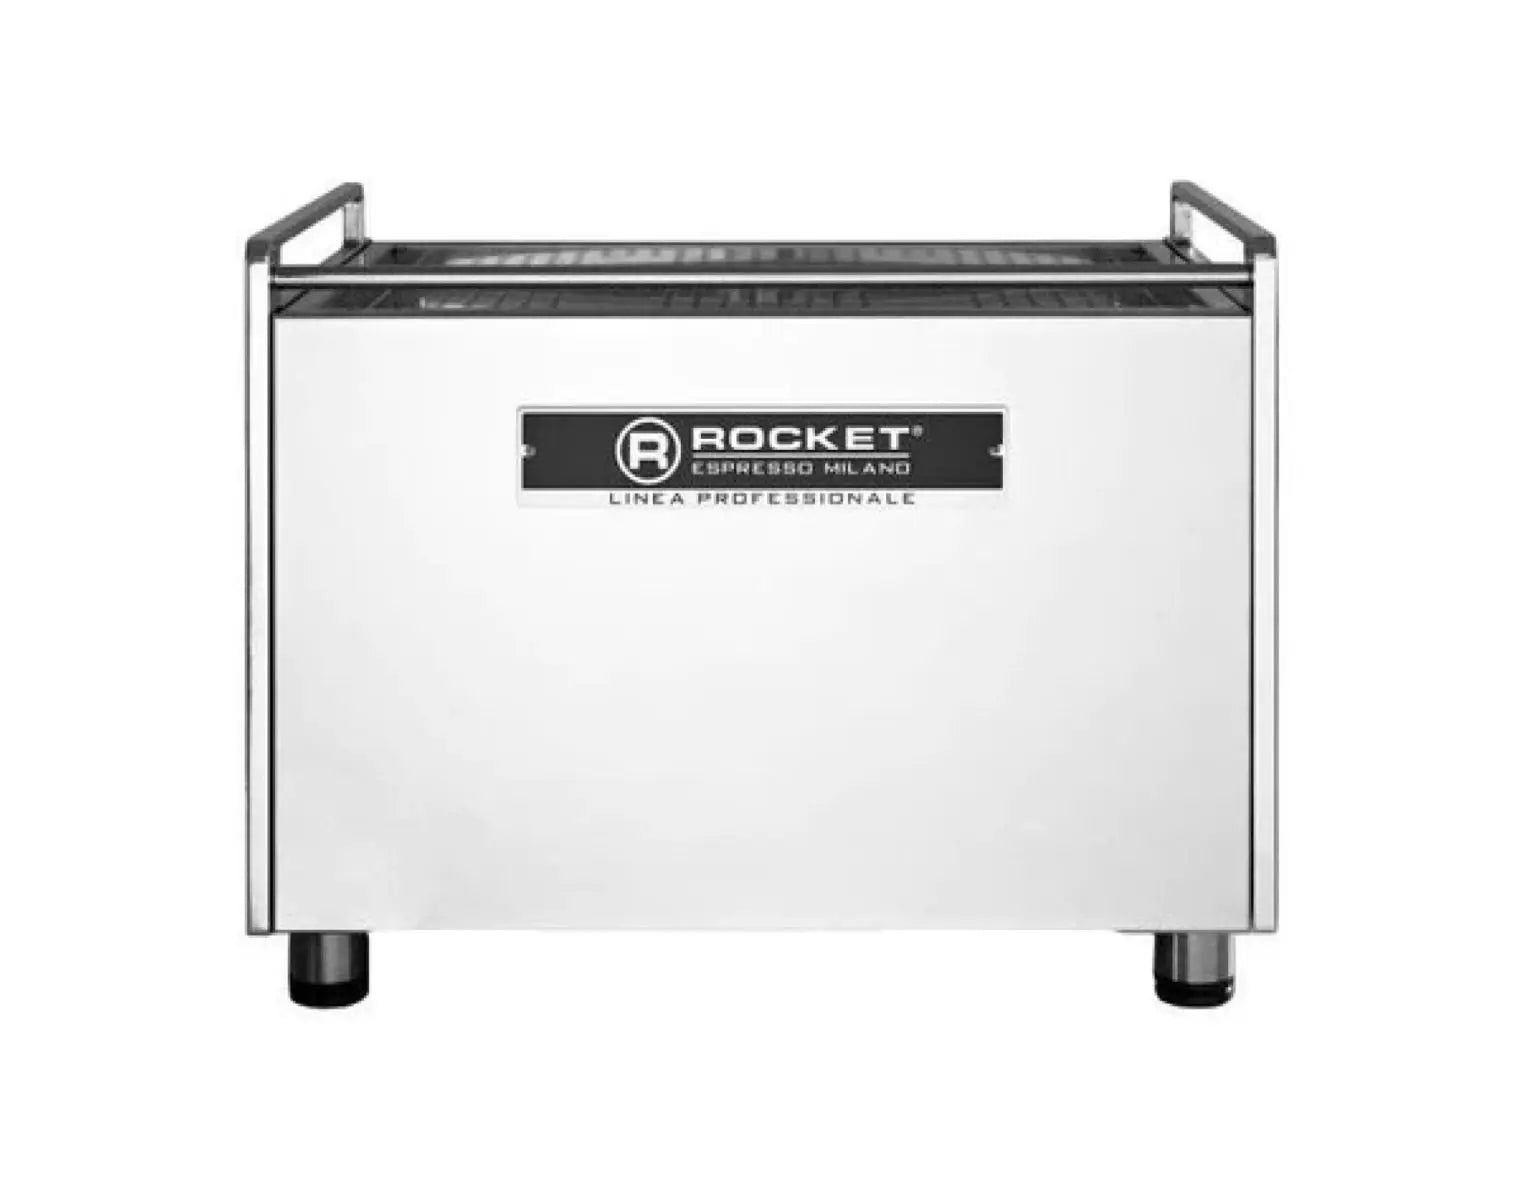 Rocket Boxer - A1 Espresso Machine with Shot Timer Rocket